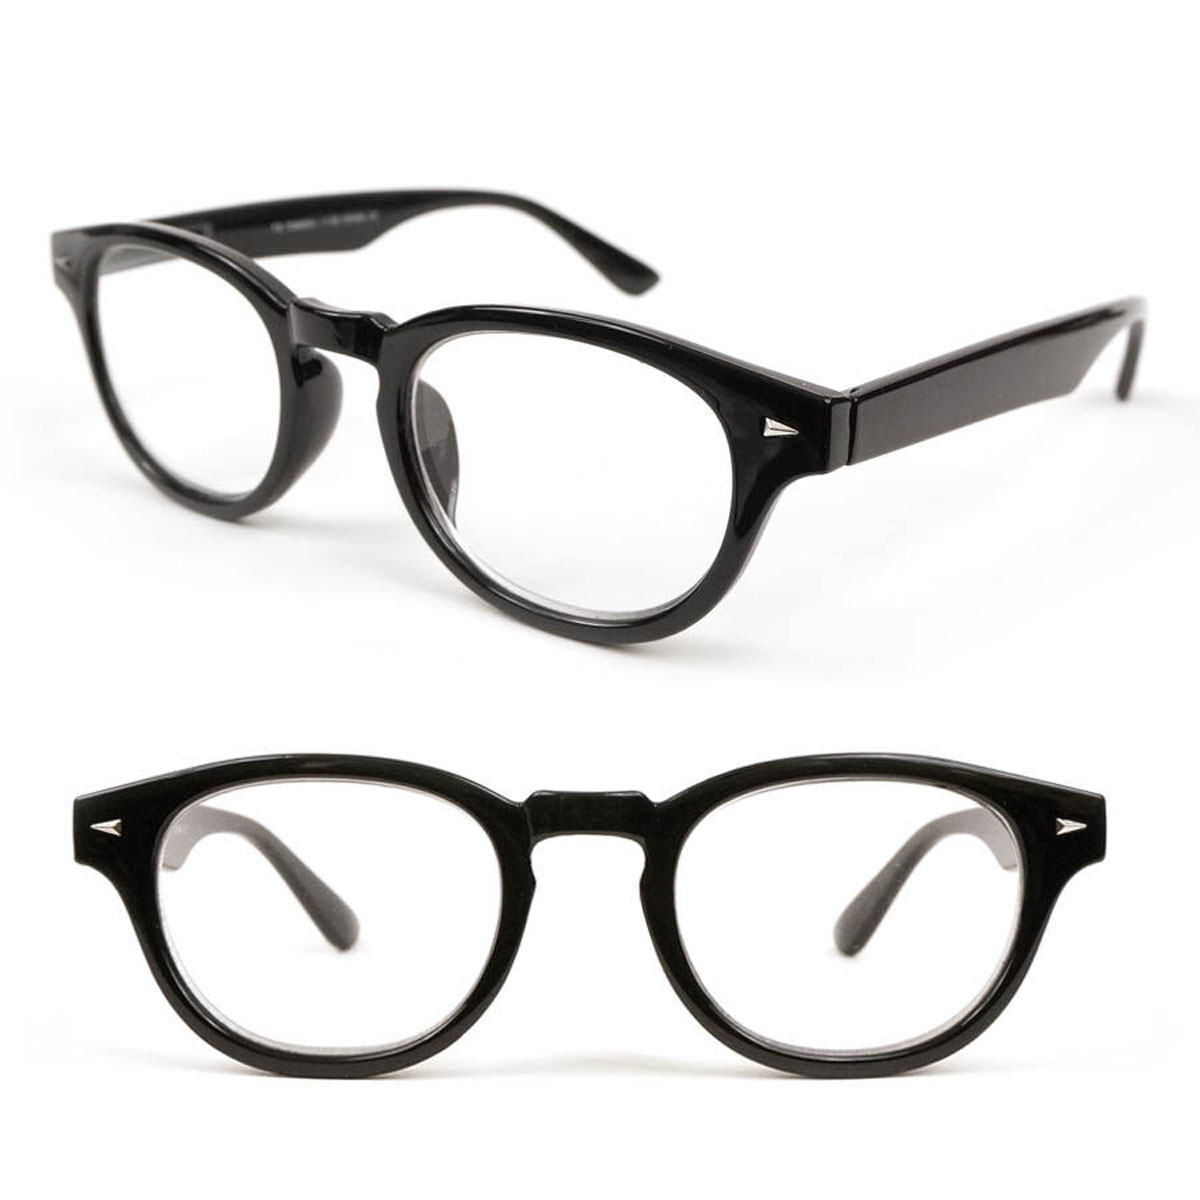 Medium Round Classic Frame Reading Glasses Geek Retro Vintage Style 100-375 - Black, +2.00